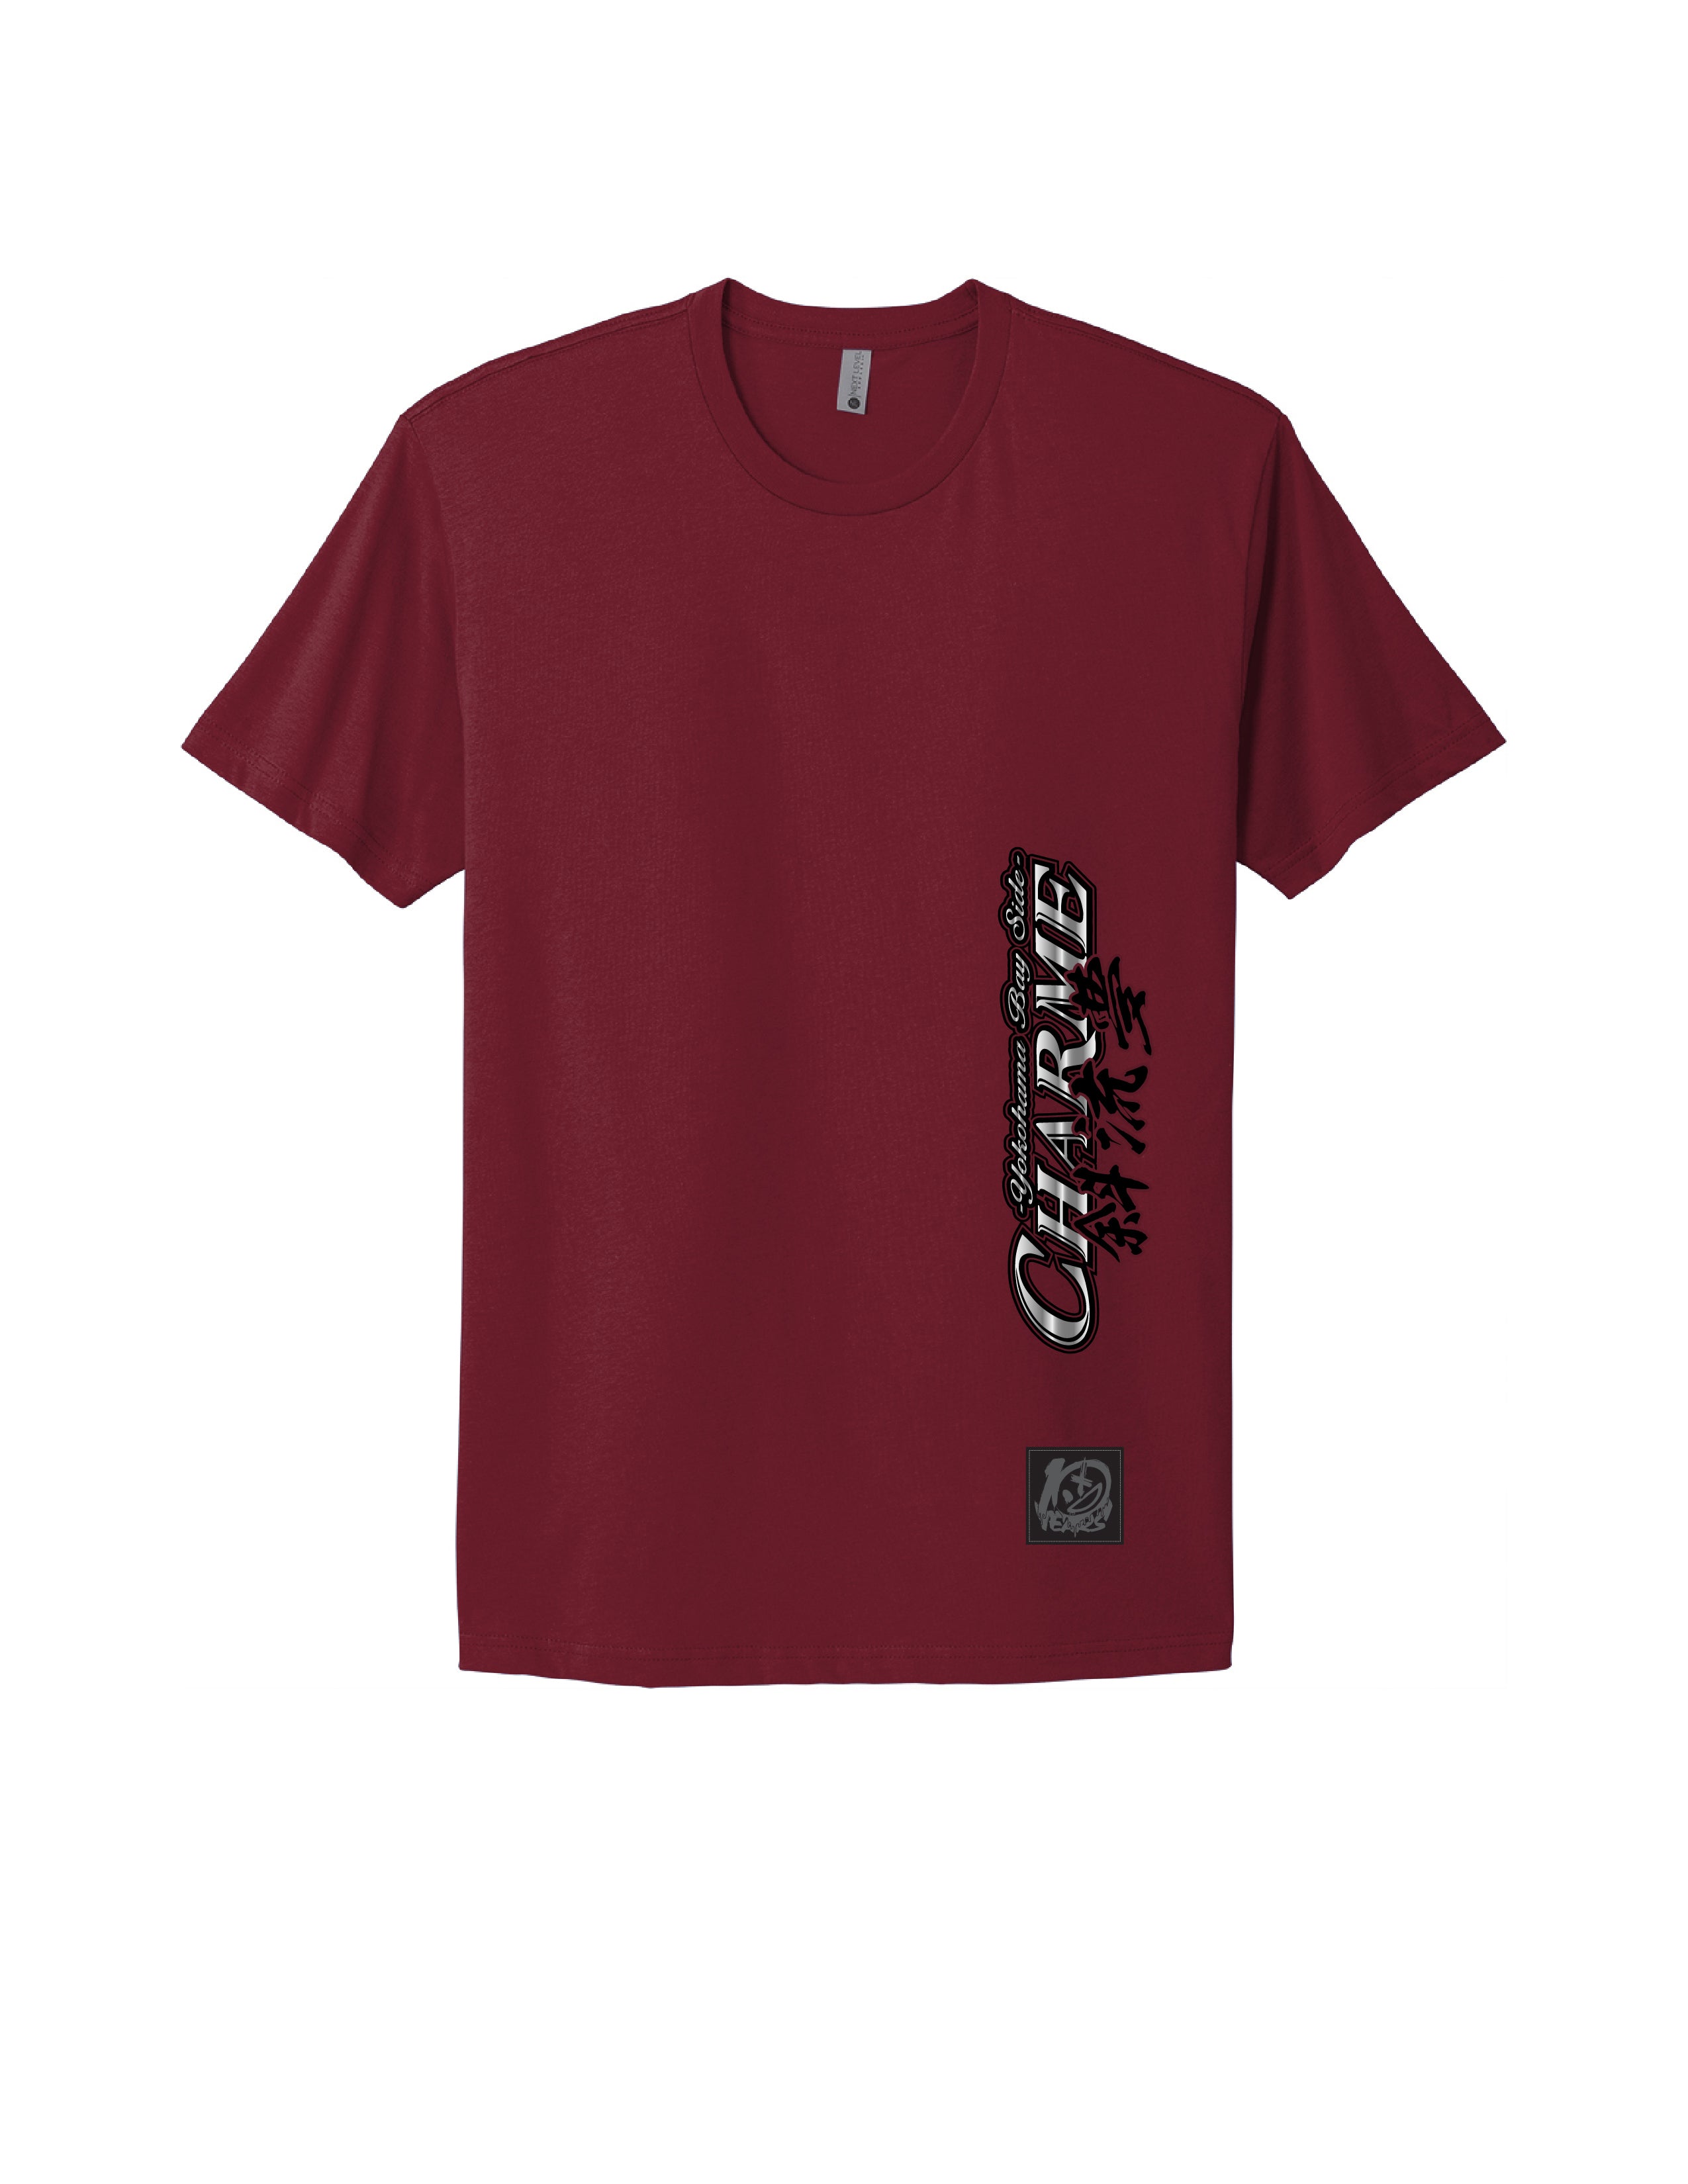 T-Shirt - Team CHARME